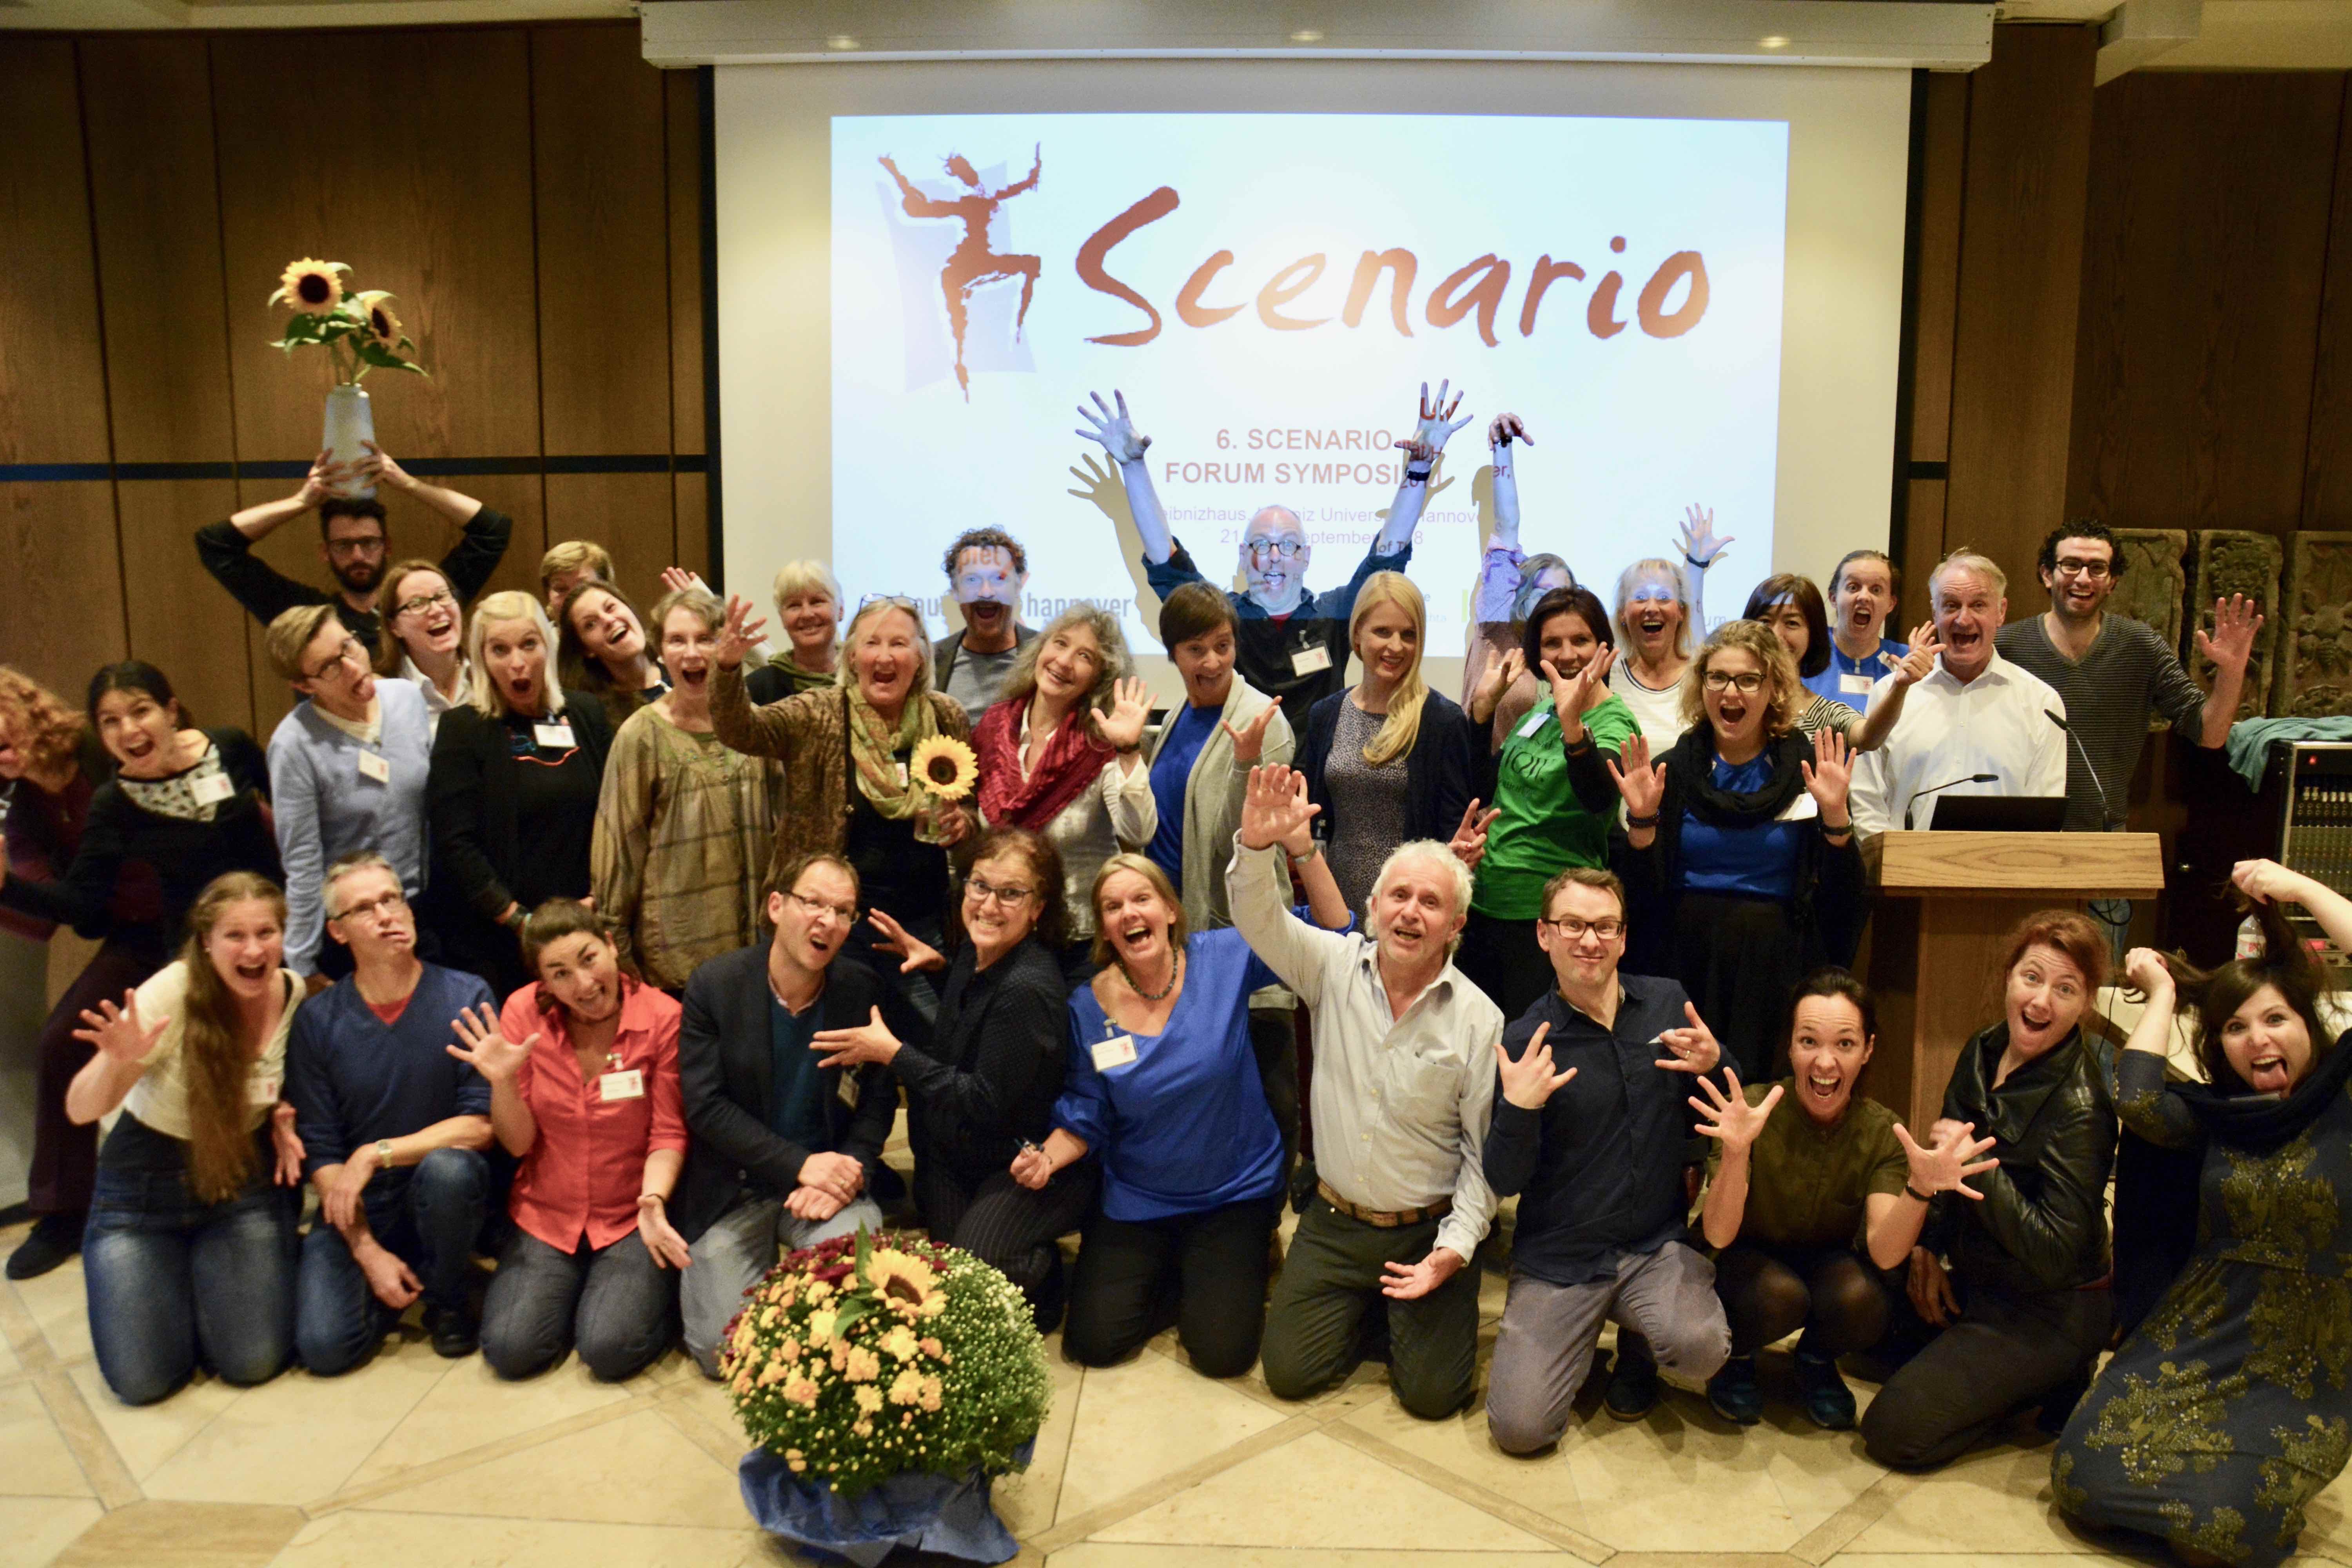 6th Scenario Forum Symposium – University of Hanover (21-22 September 2018)